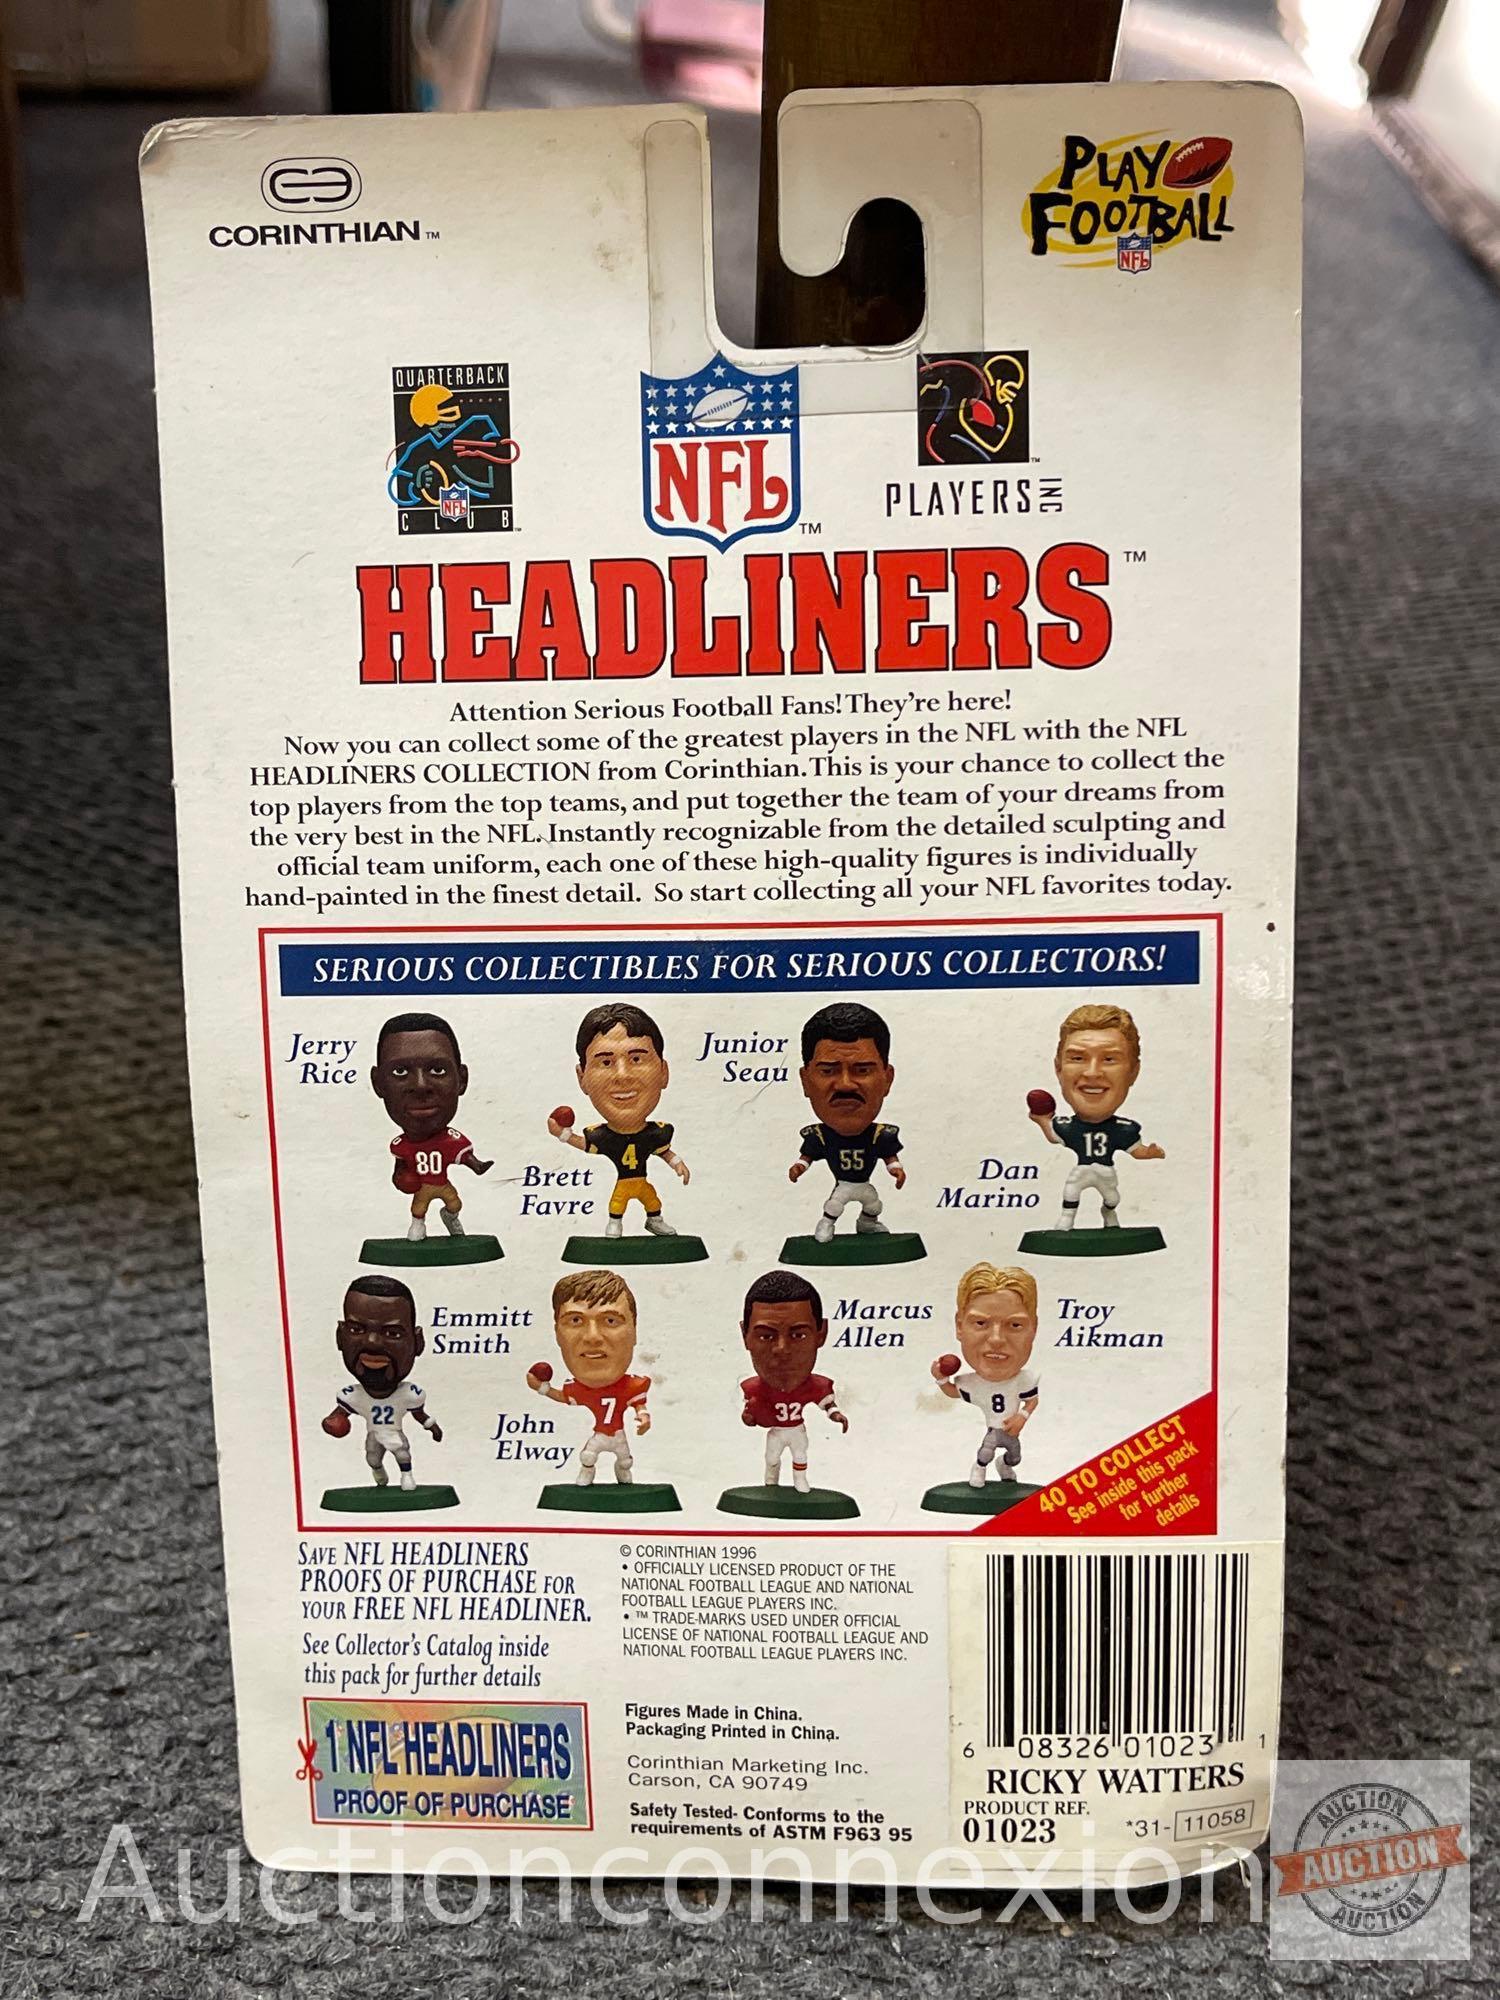 4 - 1996 NFL Headliners, Corinthian toys